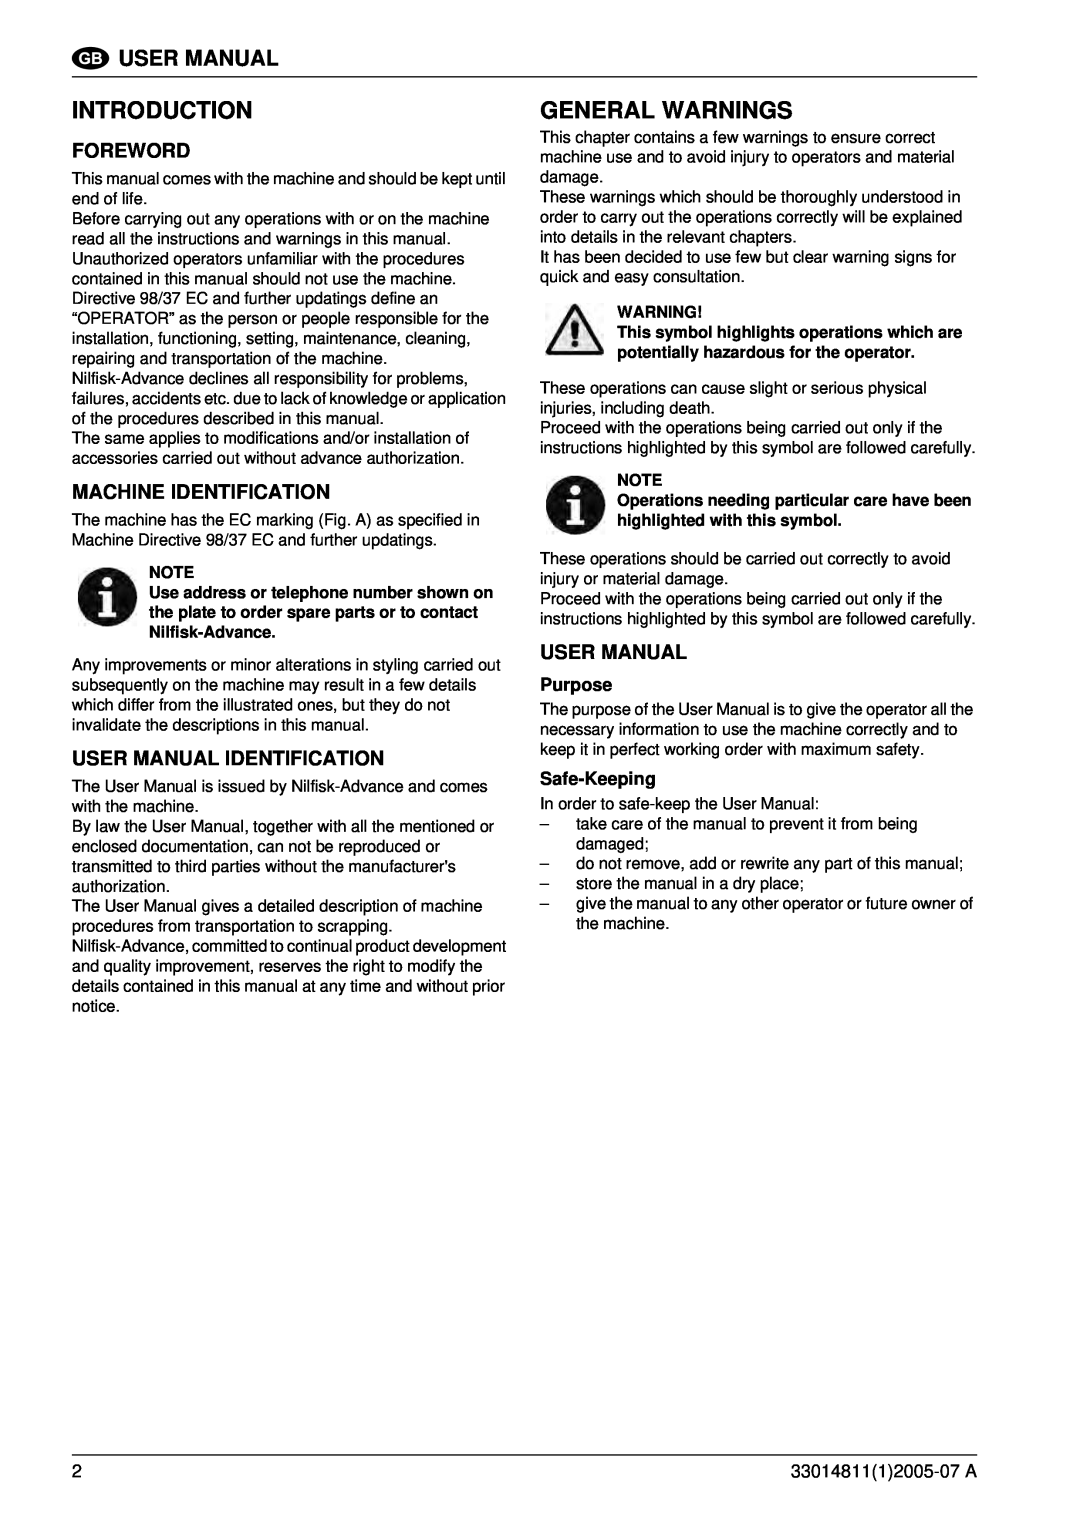 Nilfisk-ALTO SR 1450 B-D General Warnings, Foreword, Machine Identification, User Manual Identification, Purpose 